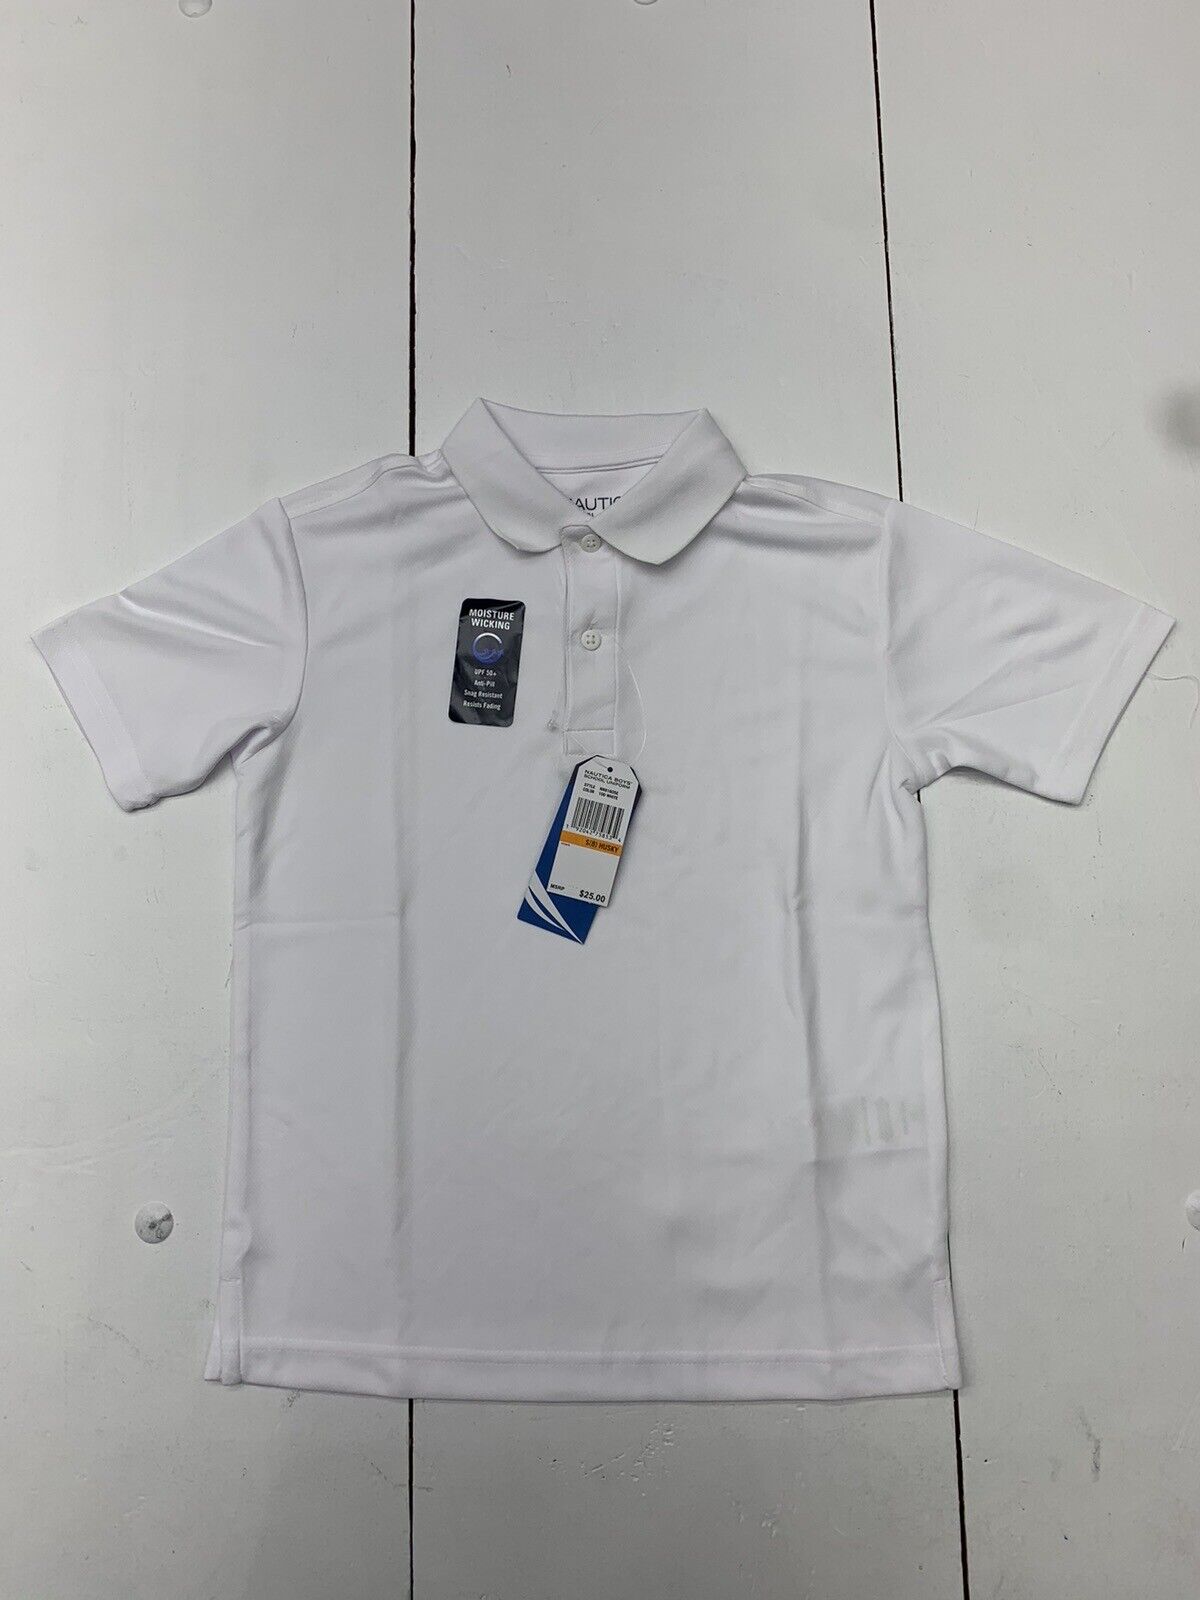 Nautica School Uniform Boys White Polo Shirt Size Husky Small